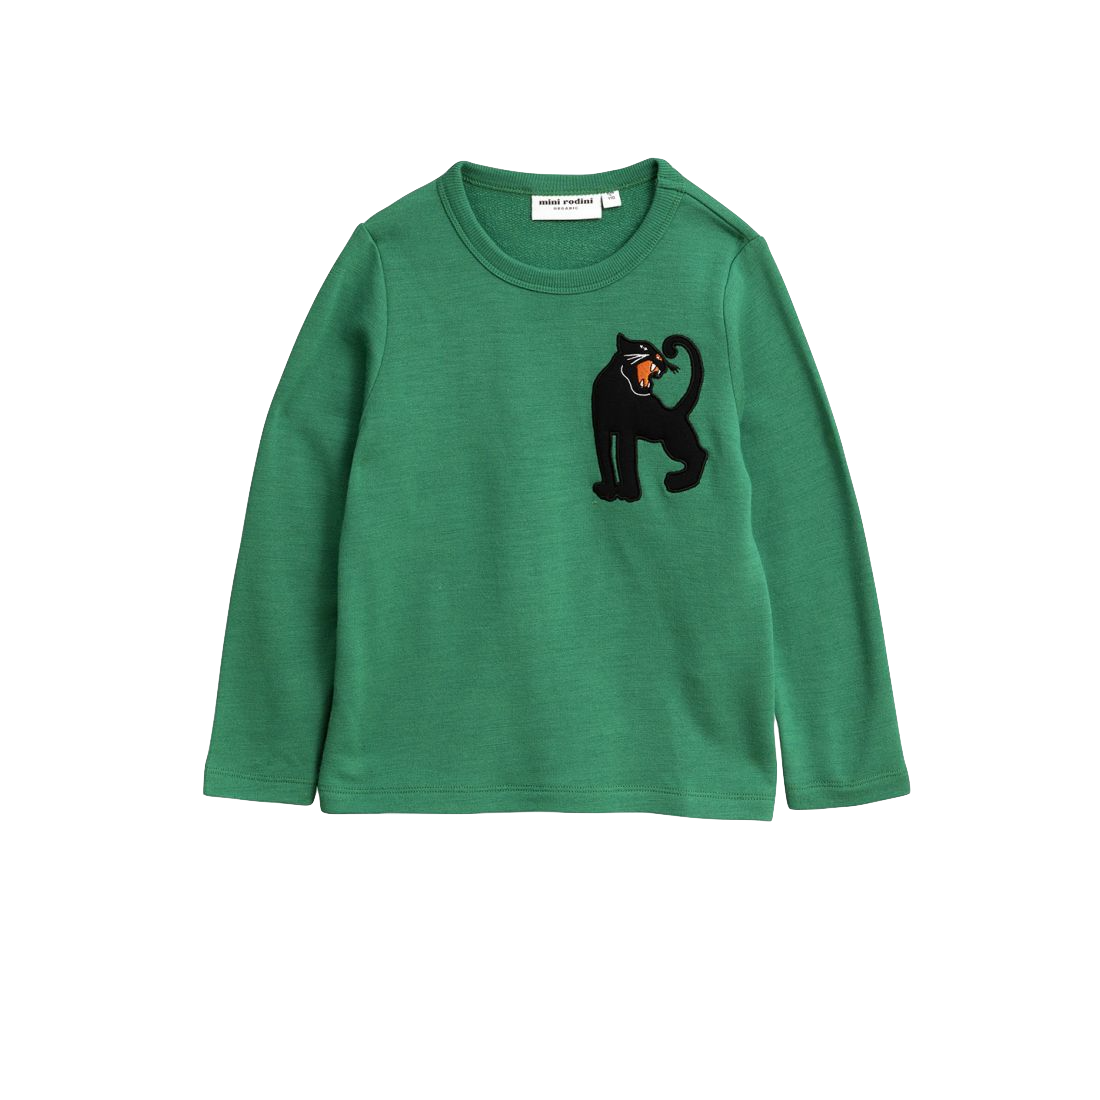 Panther wool terry sweatshirt, green - Cemarose Children's Fashion Boutique